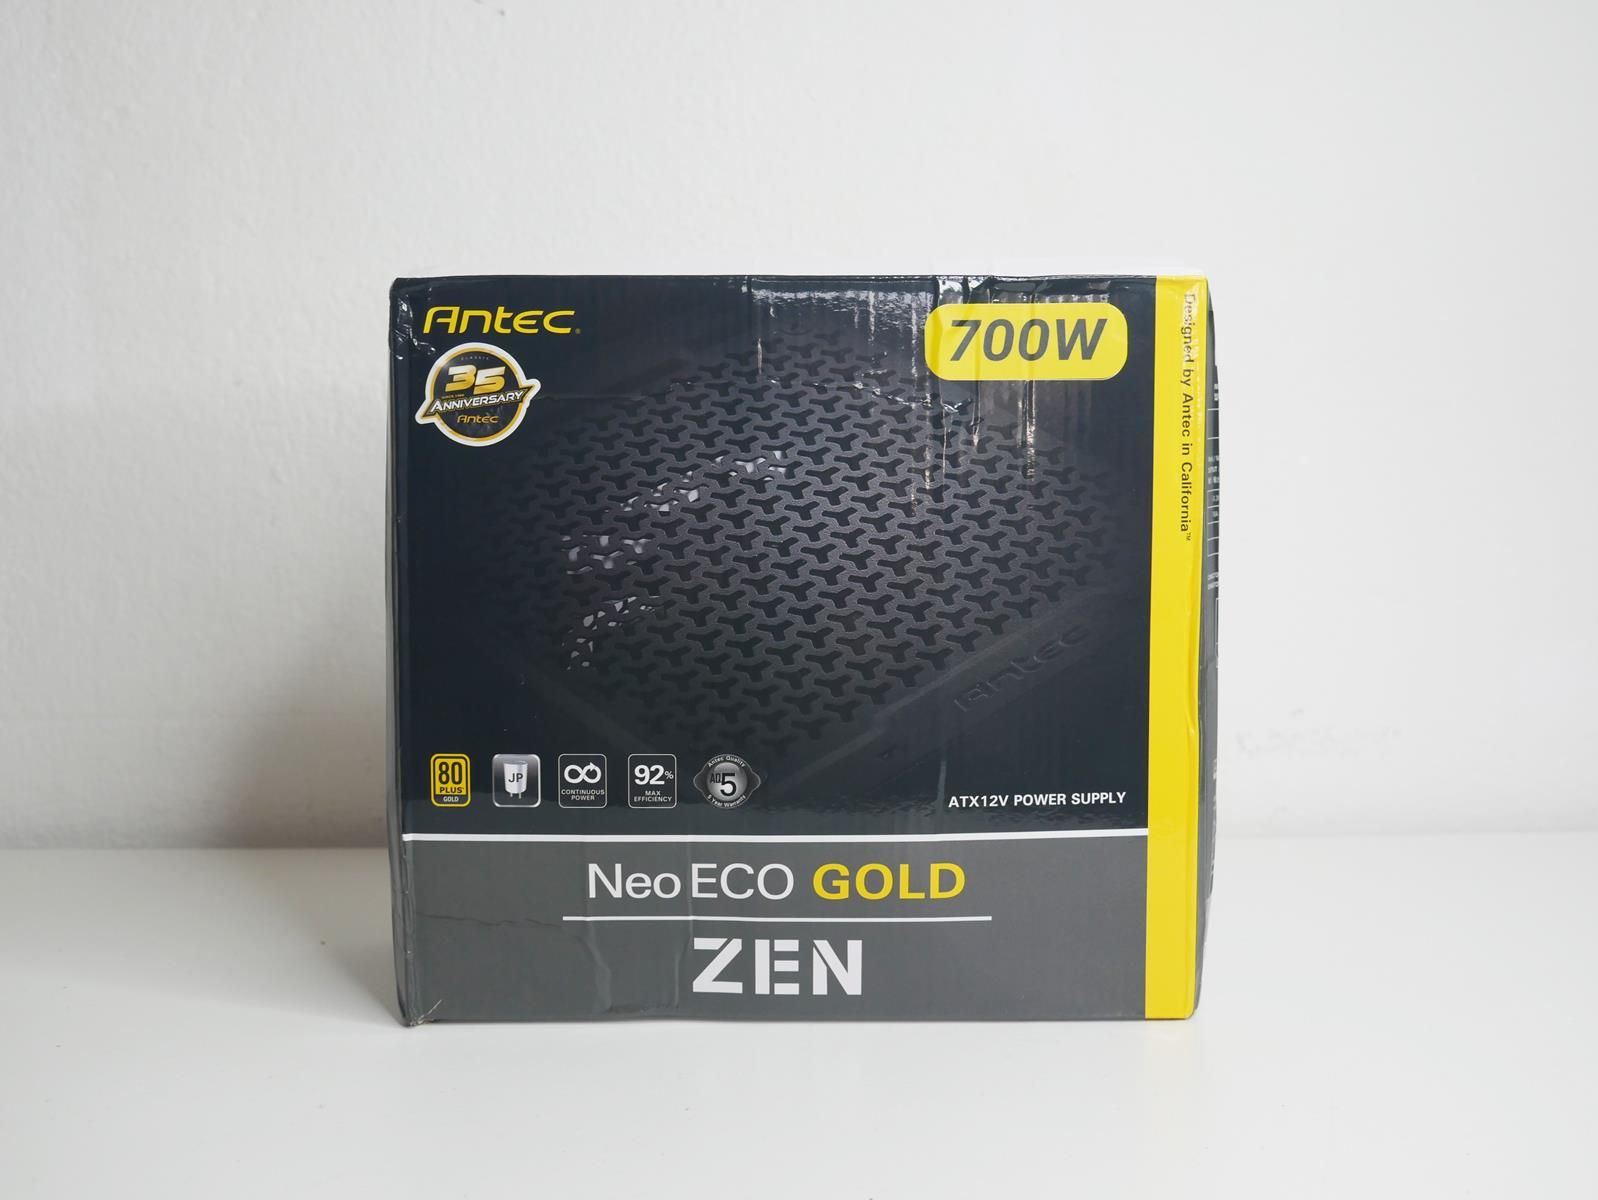 Review Antec Neo Eco Gold Zen 700W 3